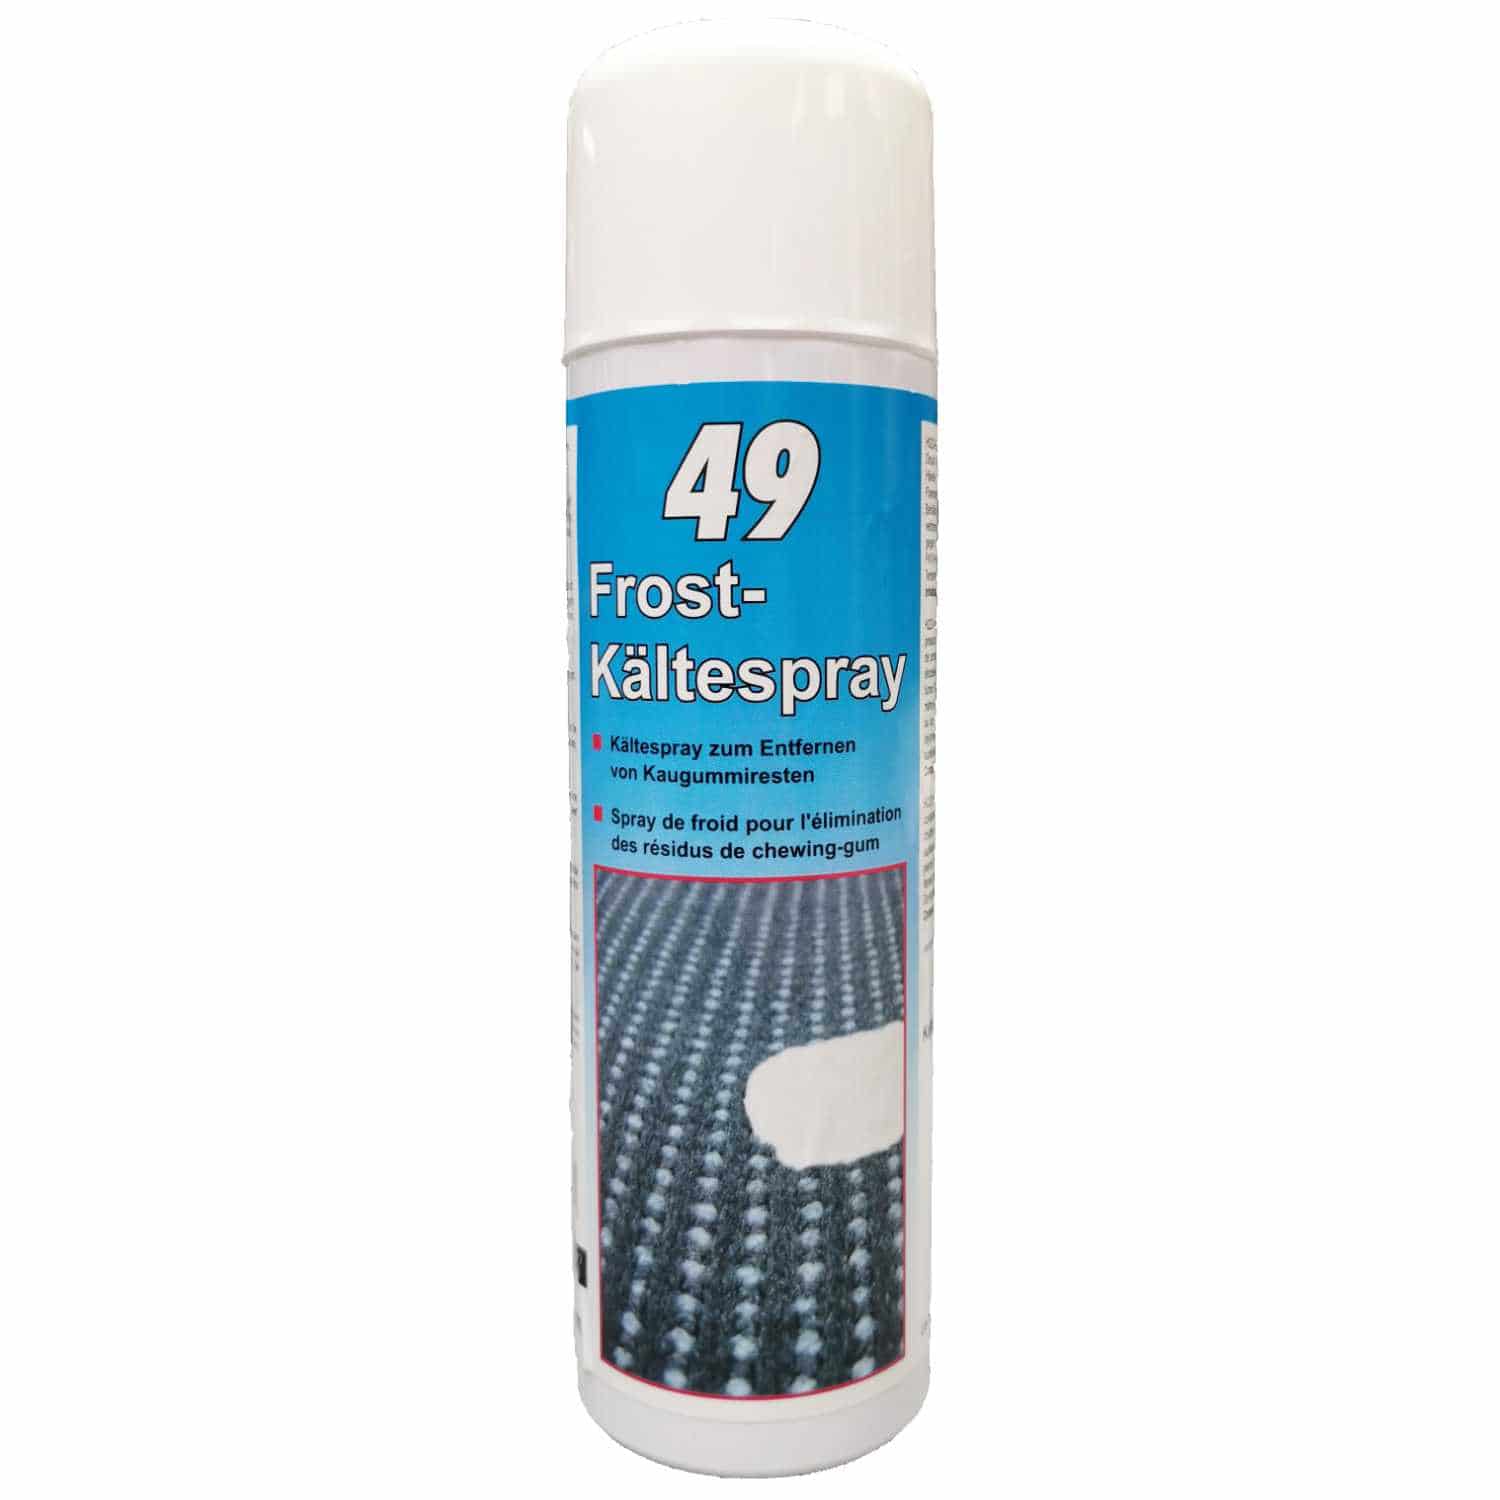 49 - Frost Kältespray KAUGUMMIENTFERNER - Dose à 500 ml - ADR Kl. 2.1 UN 1950 VG II